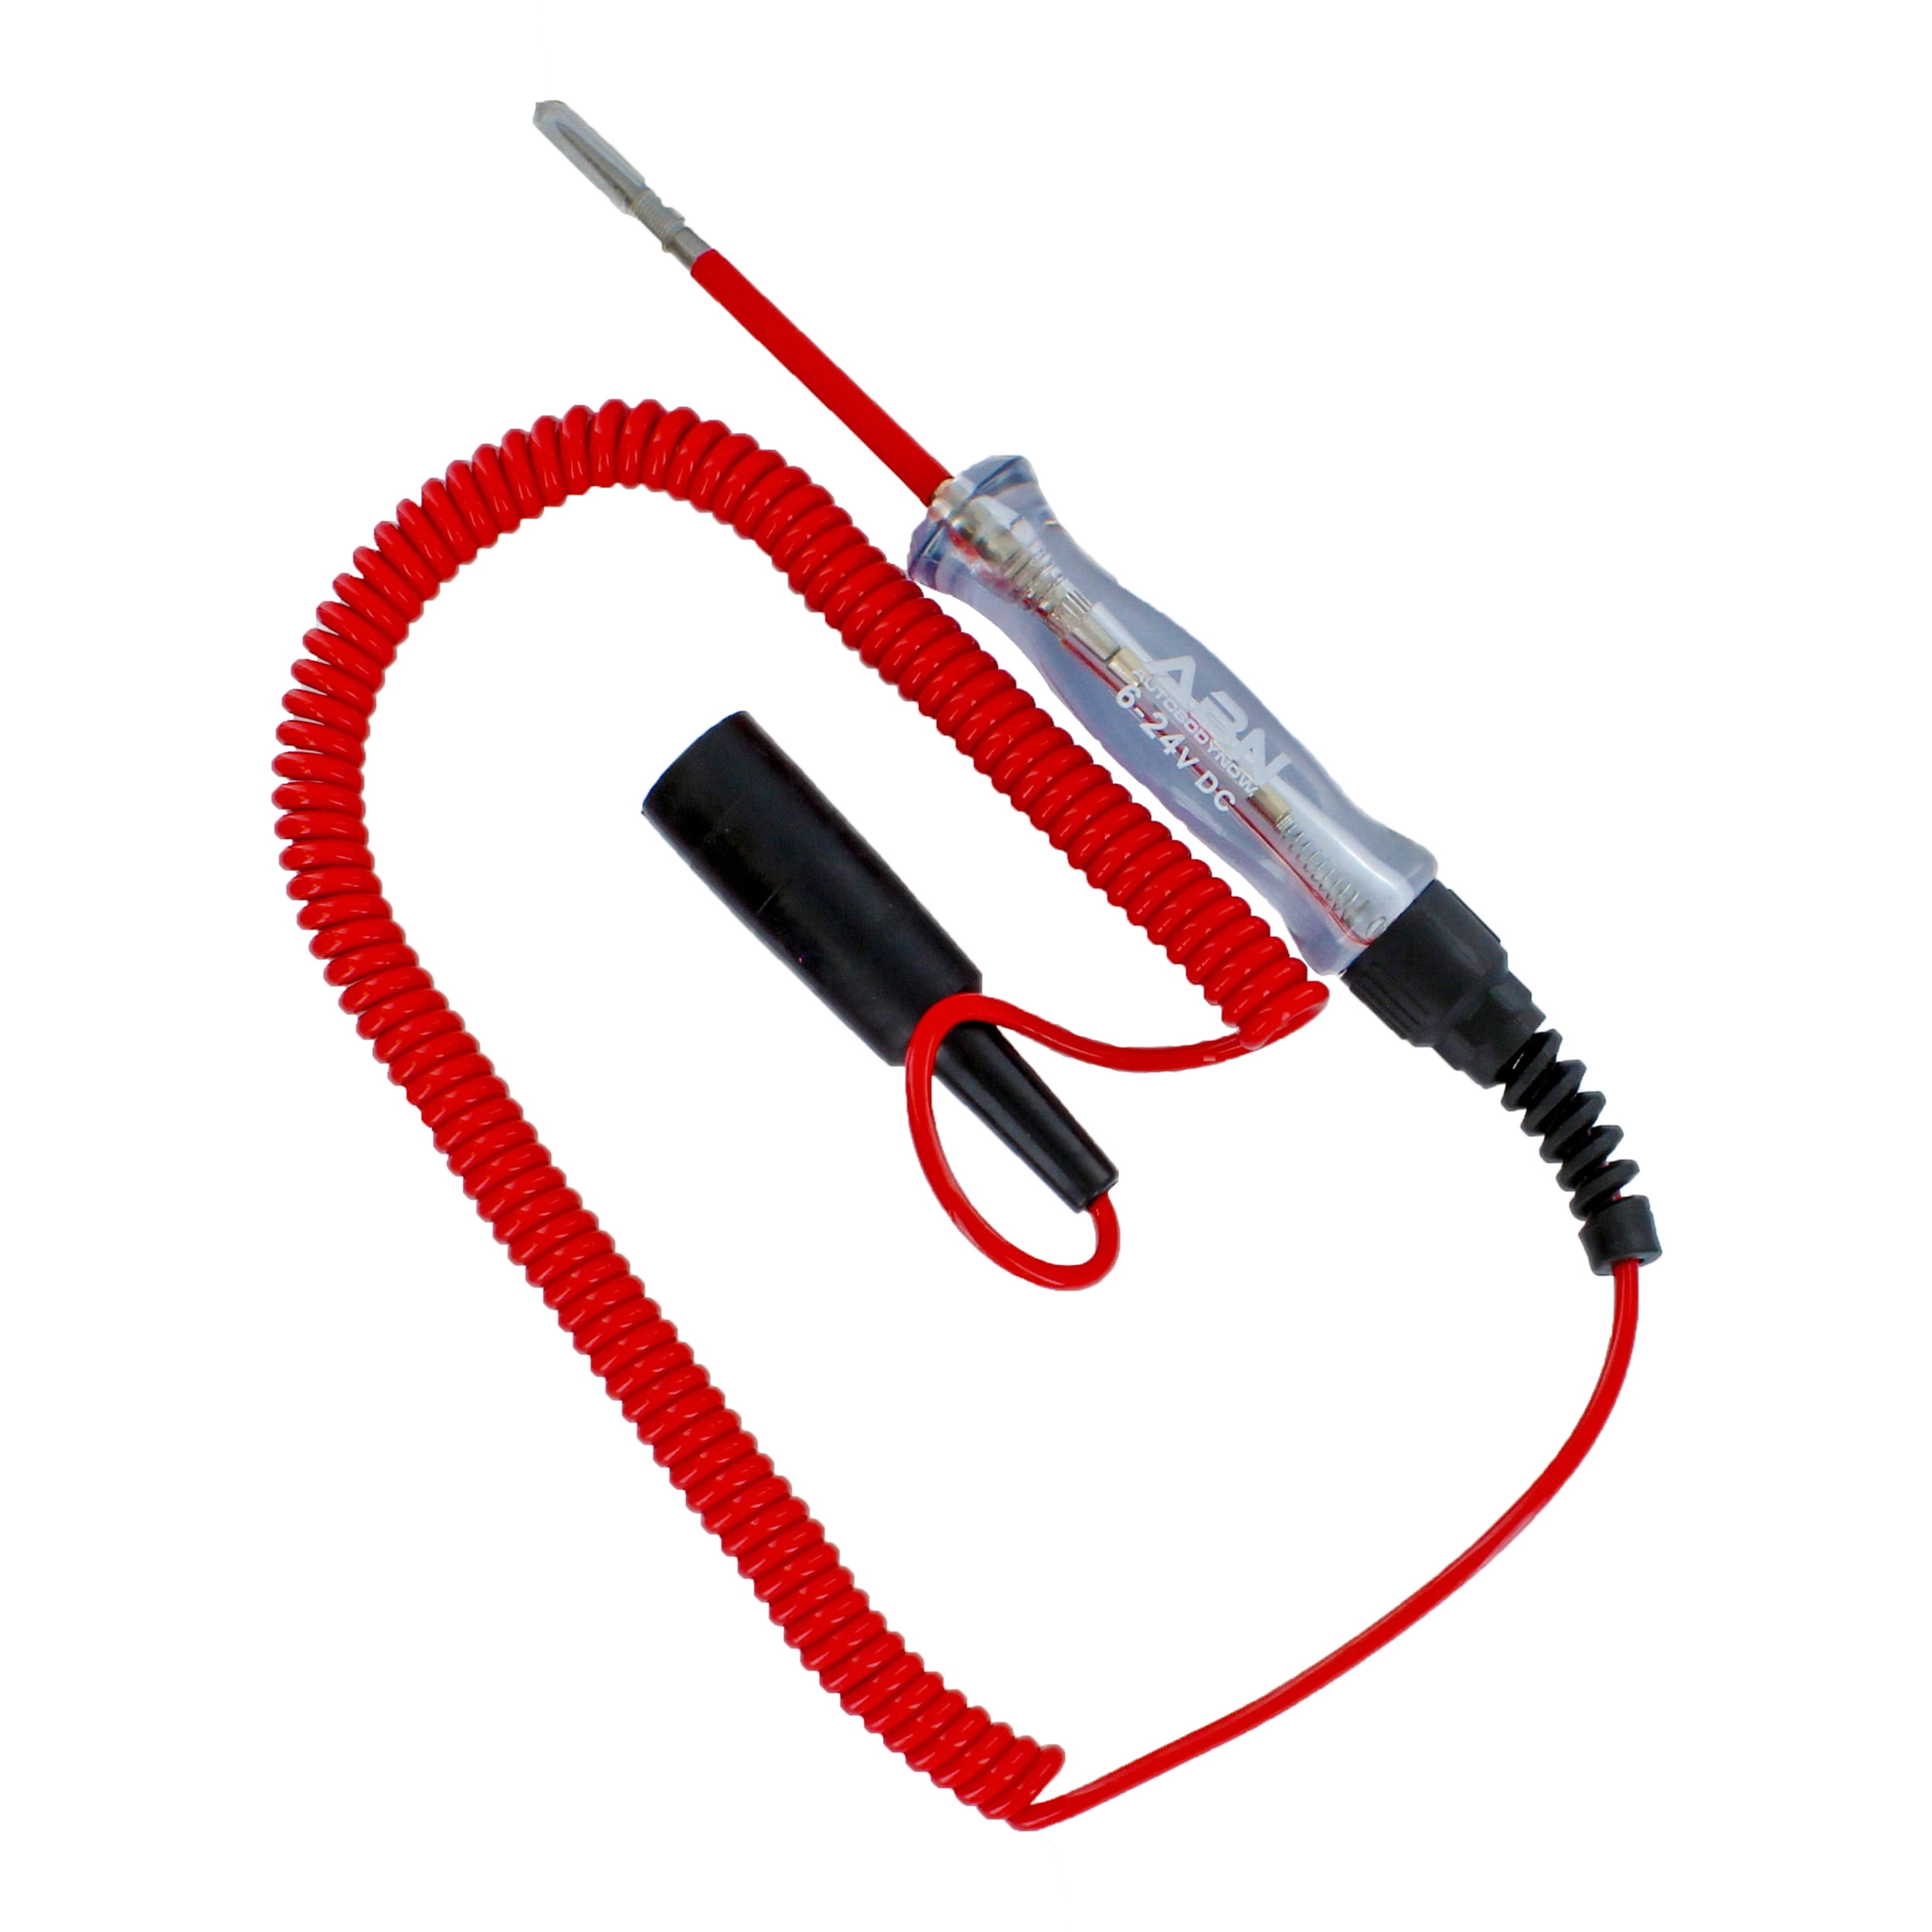 TKDMR Insulation Wire Piercing Probes Automotive Diagnostic Test Accessories 4 